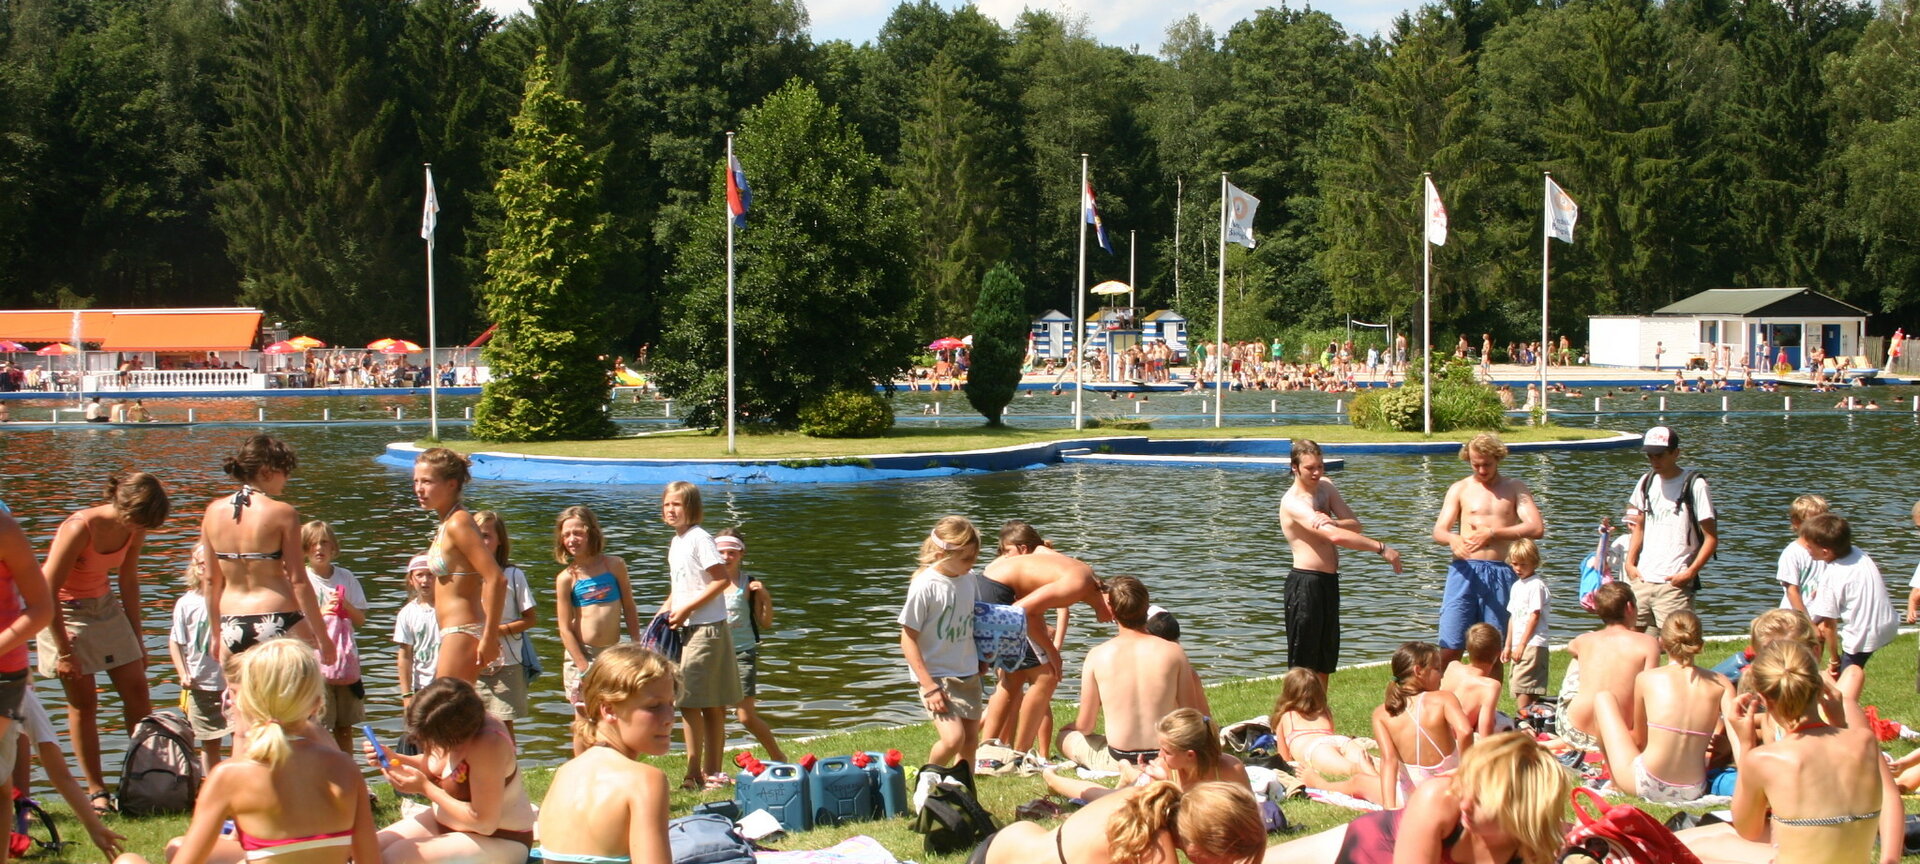 Natuurbad De Wouterbron - Ligweide, roei- en zwemvijver